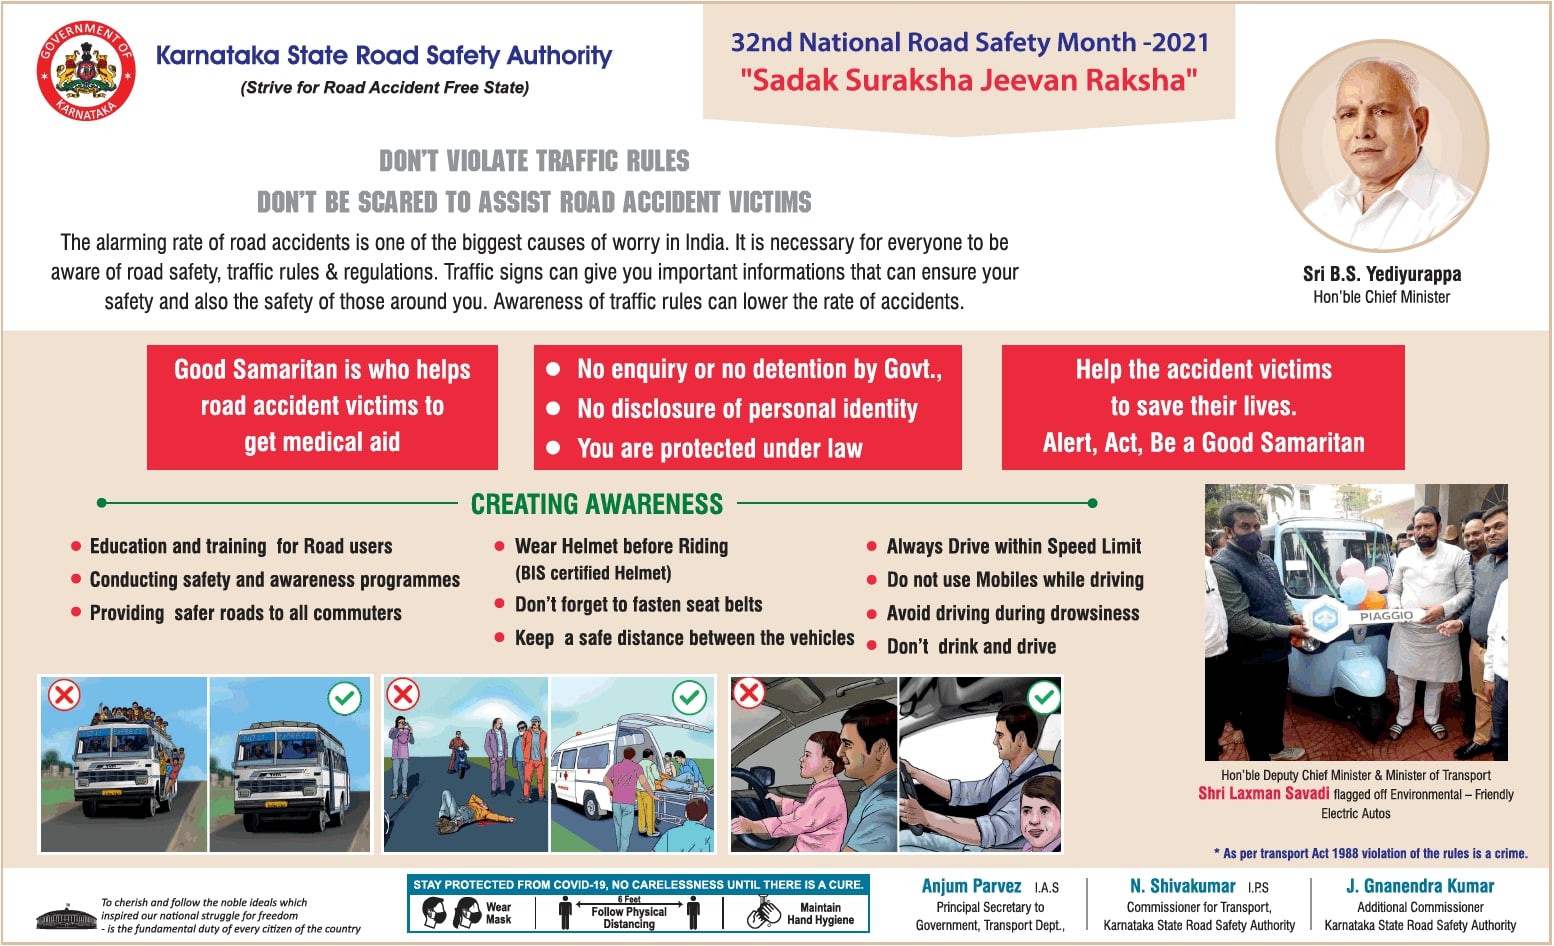 karnataka-state-road-safety-authority-honarable-chief-minister-sri-b-s-yediyurappa-ad-times-of-india-bangalore-11-02-2021